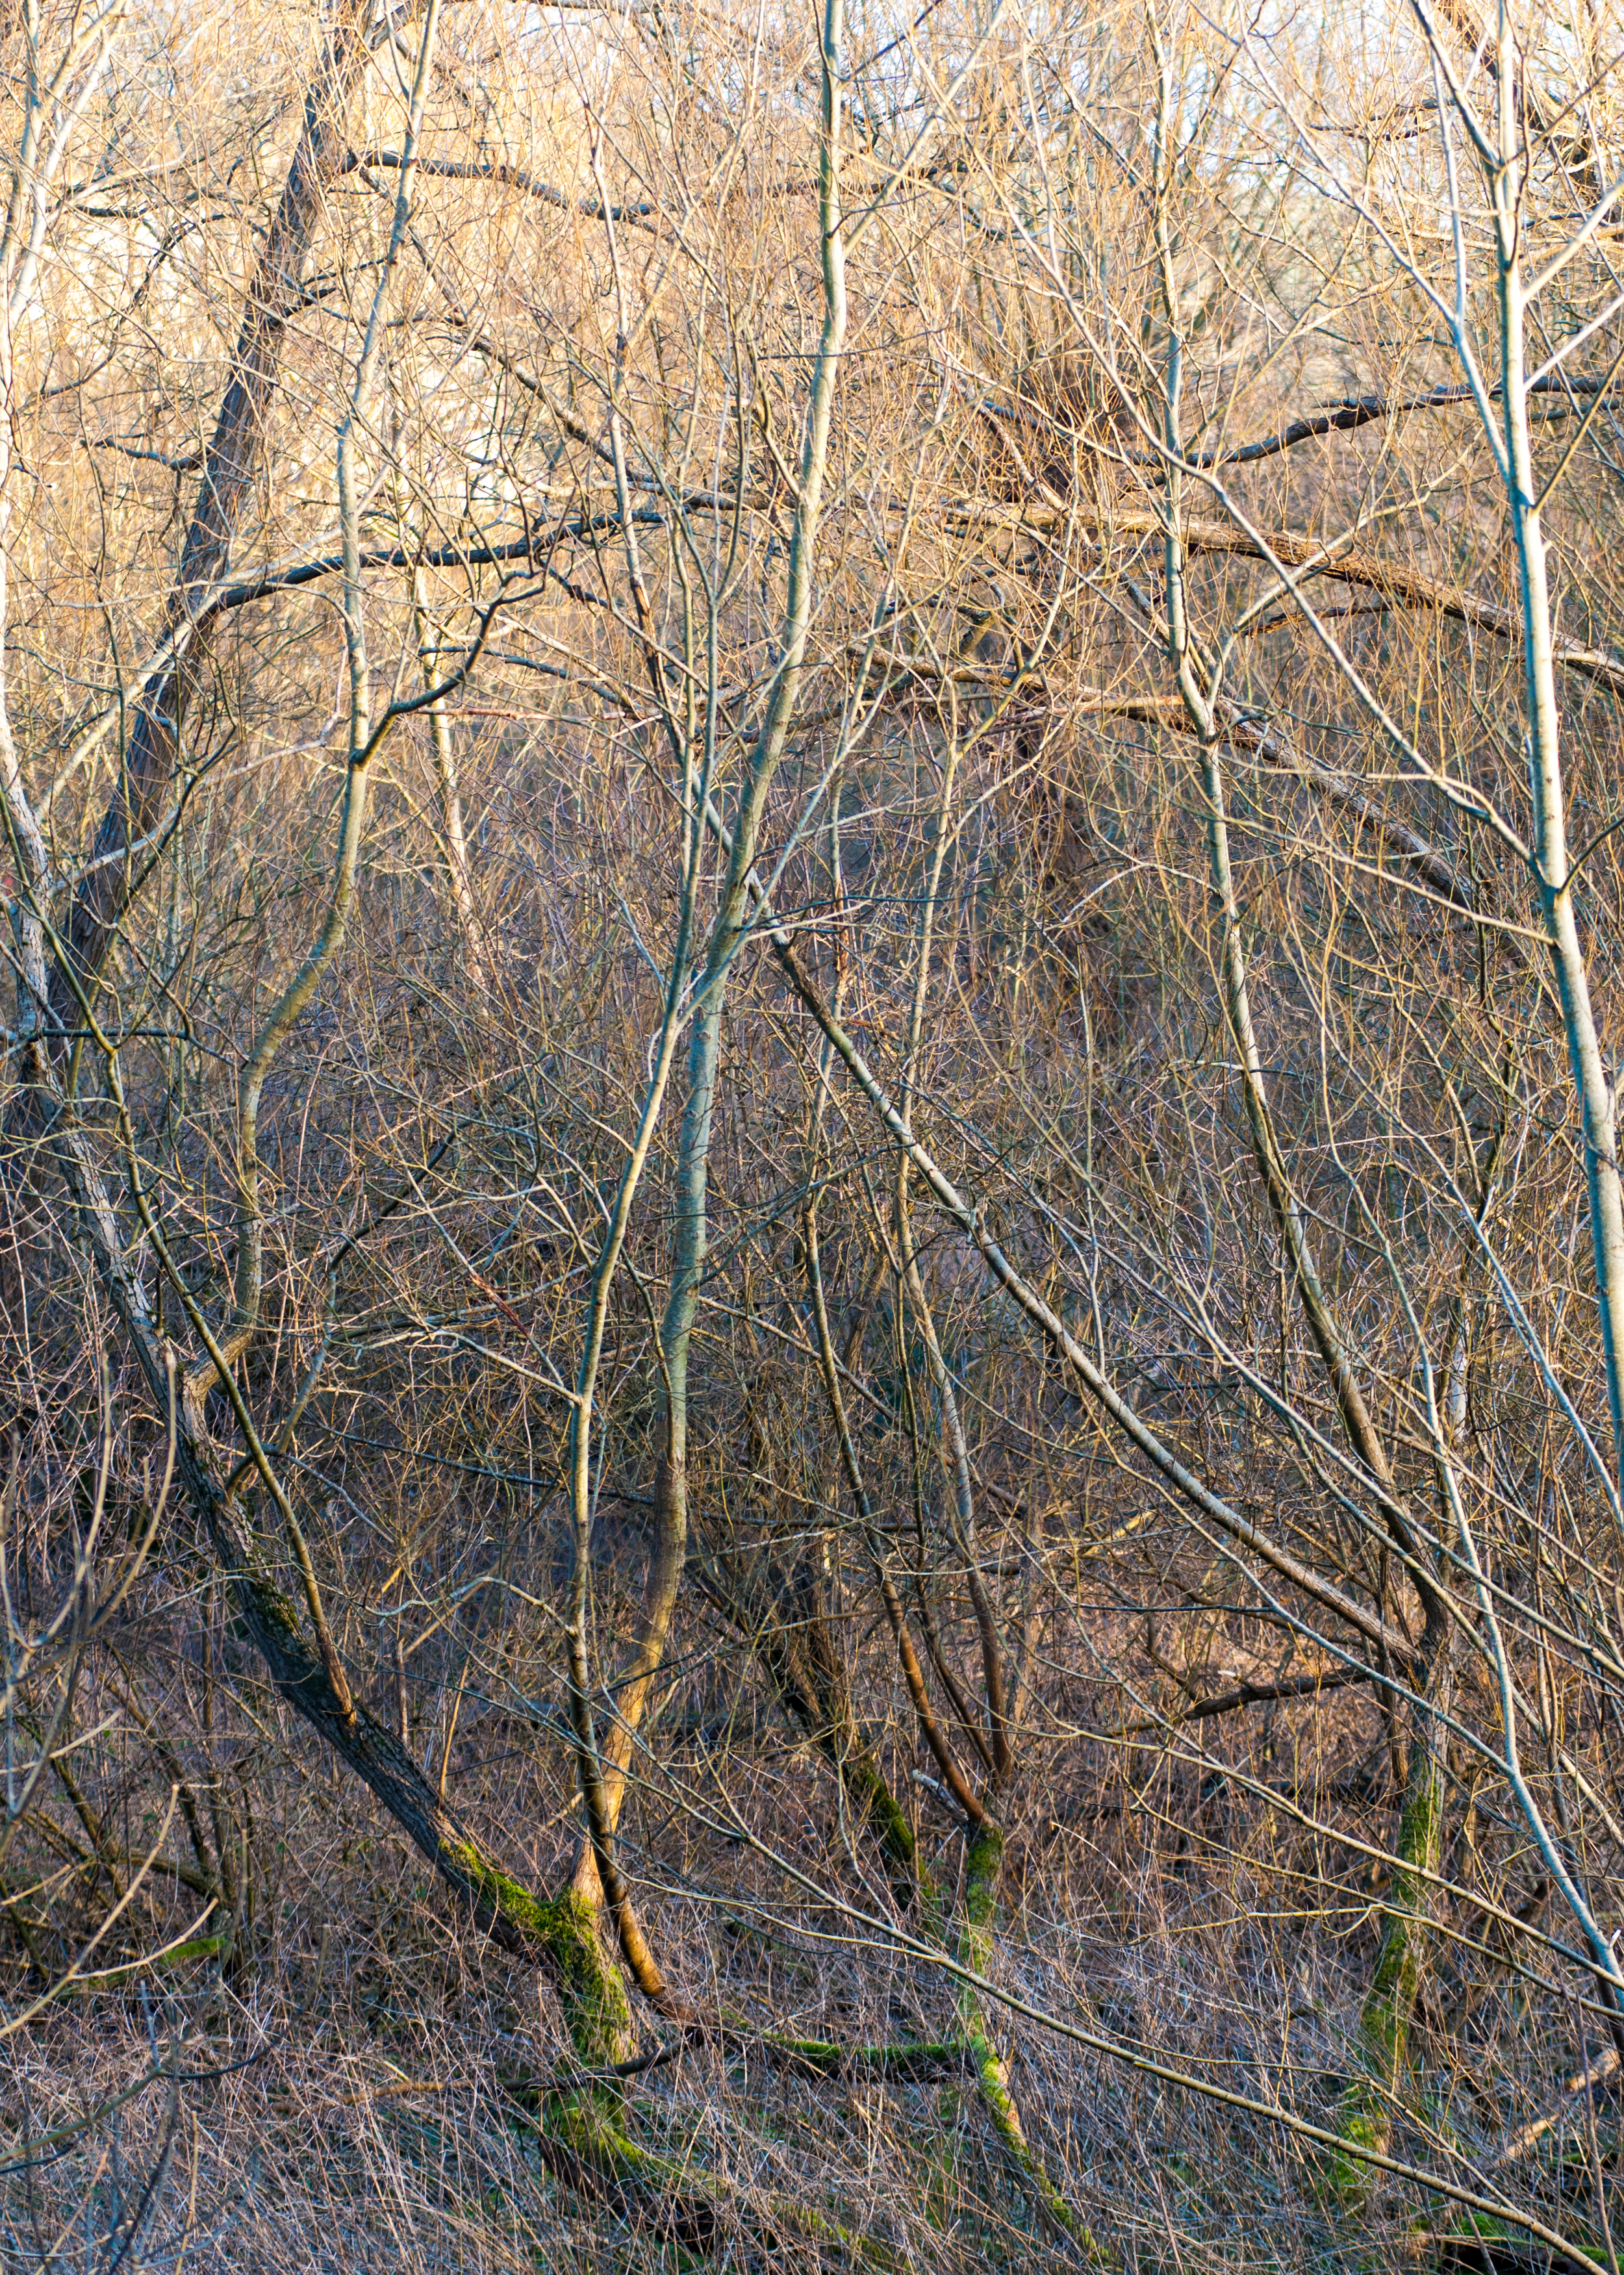 Tangled trees in a wood.jpg